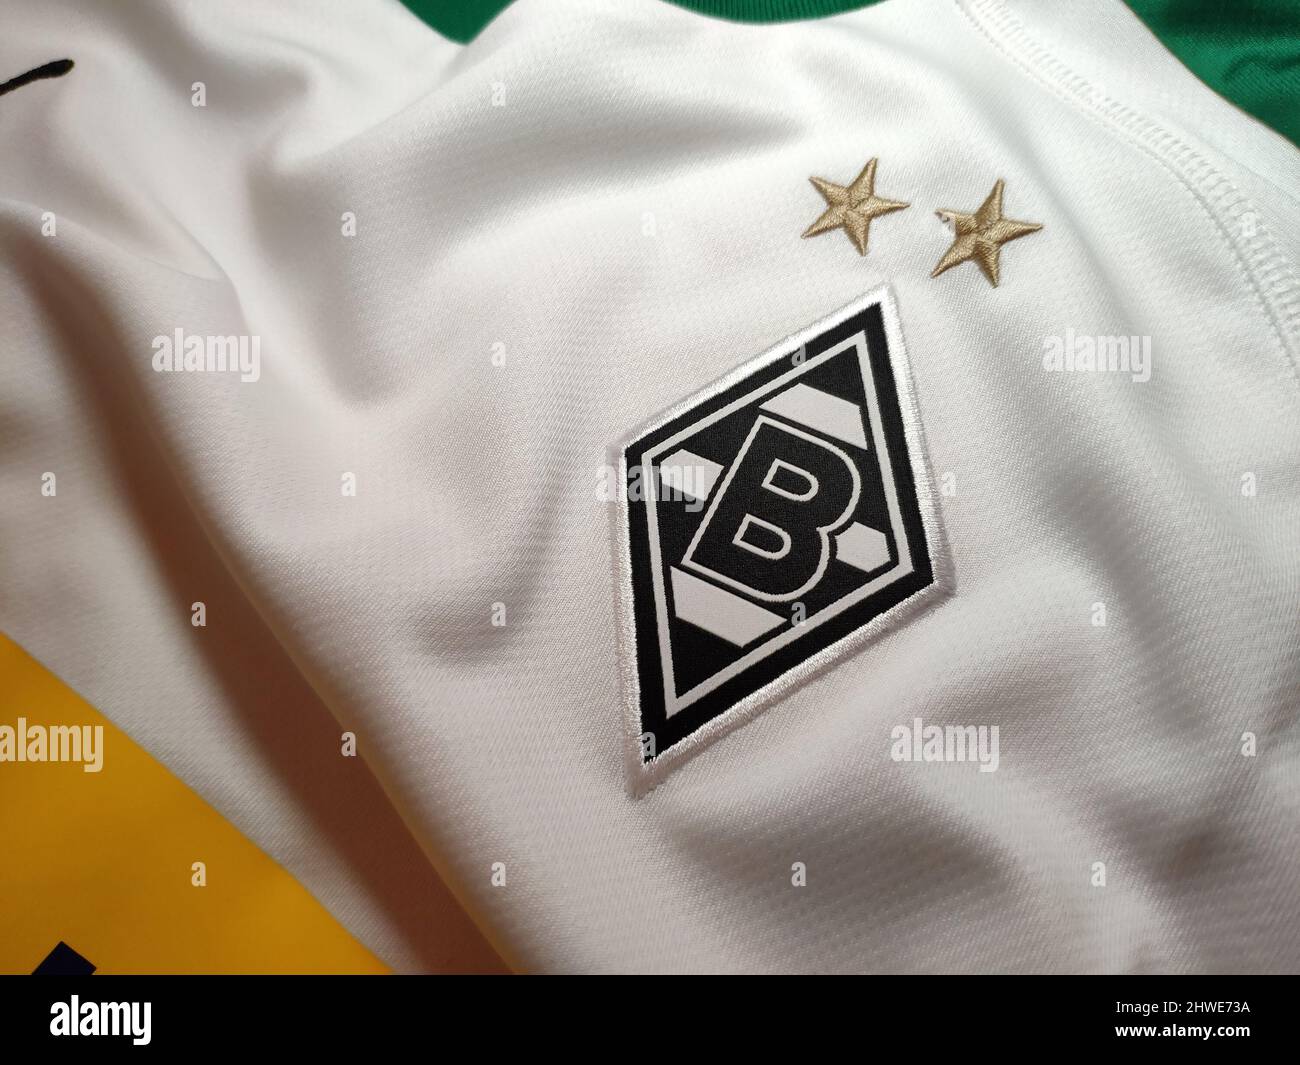 Borussia Mönchengladbach logo emblem on the white home jersey background. Stock Photo